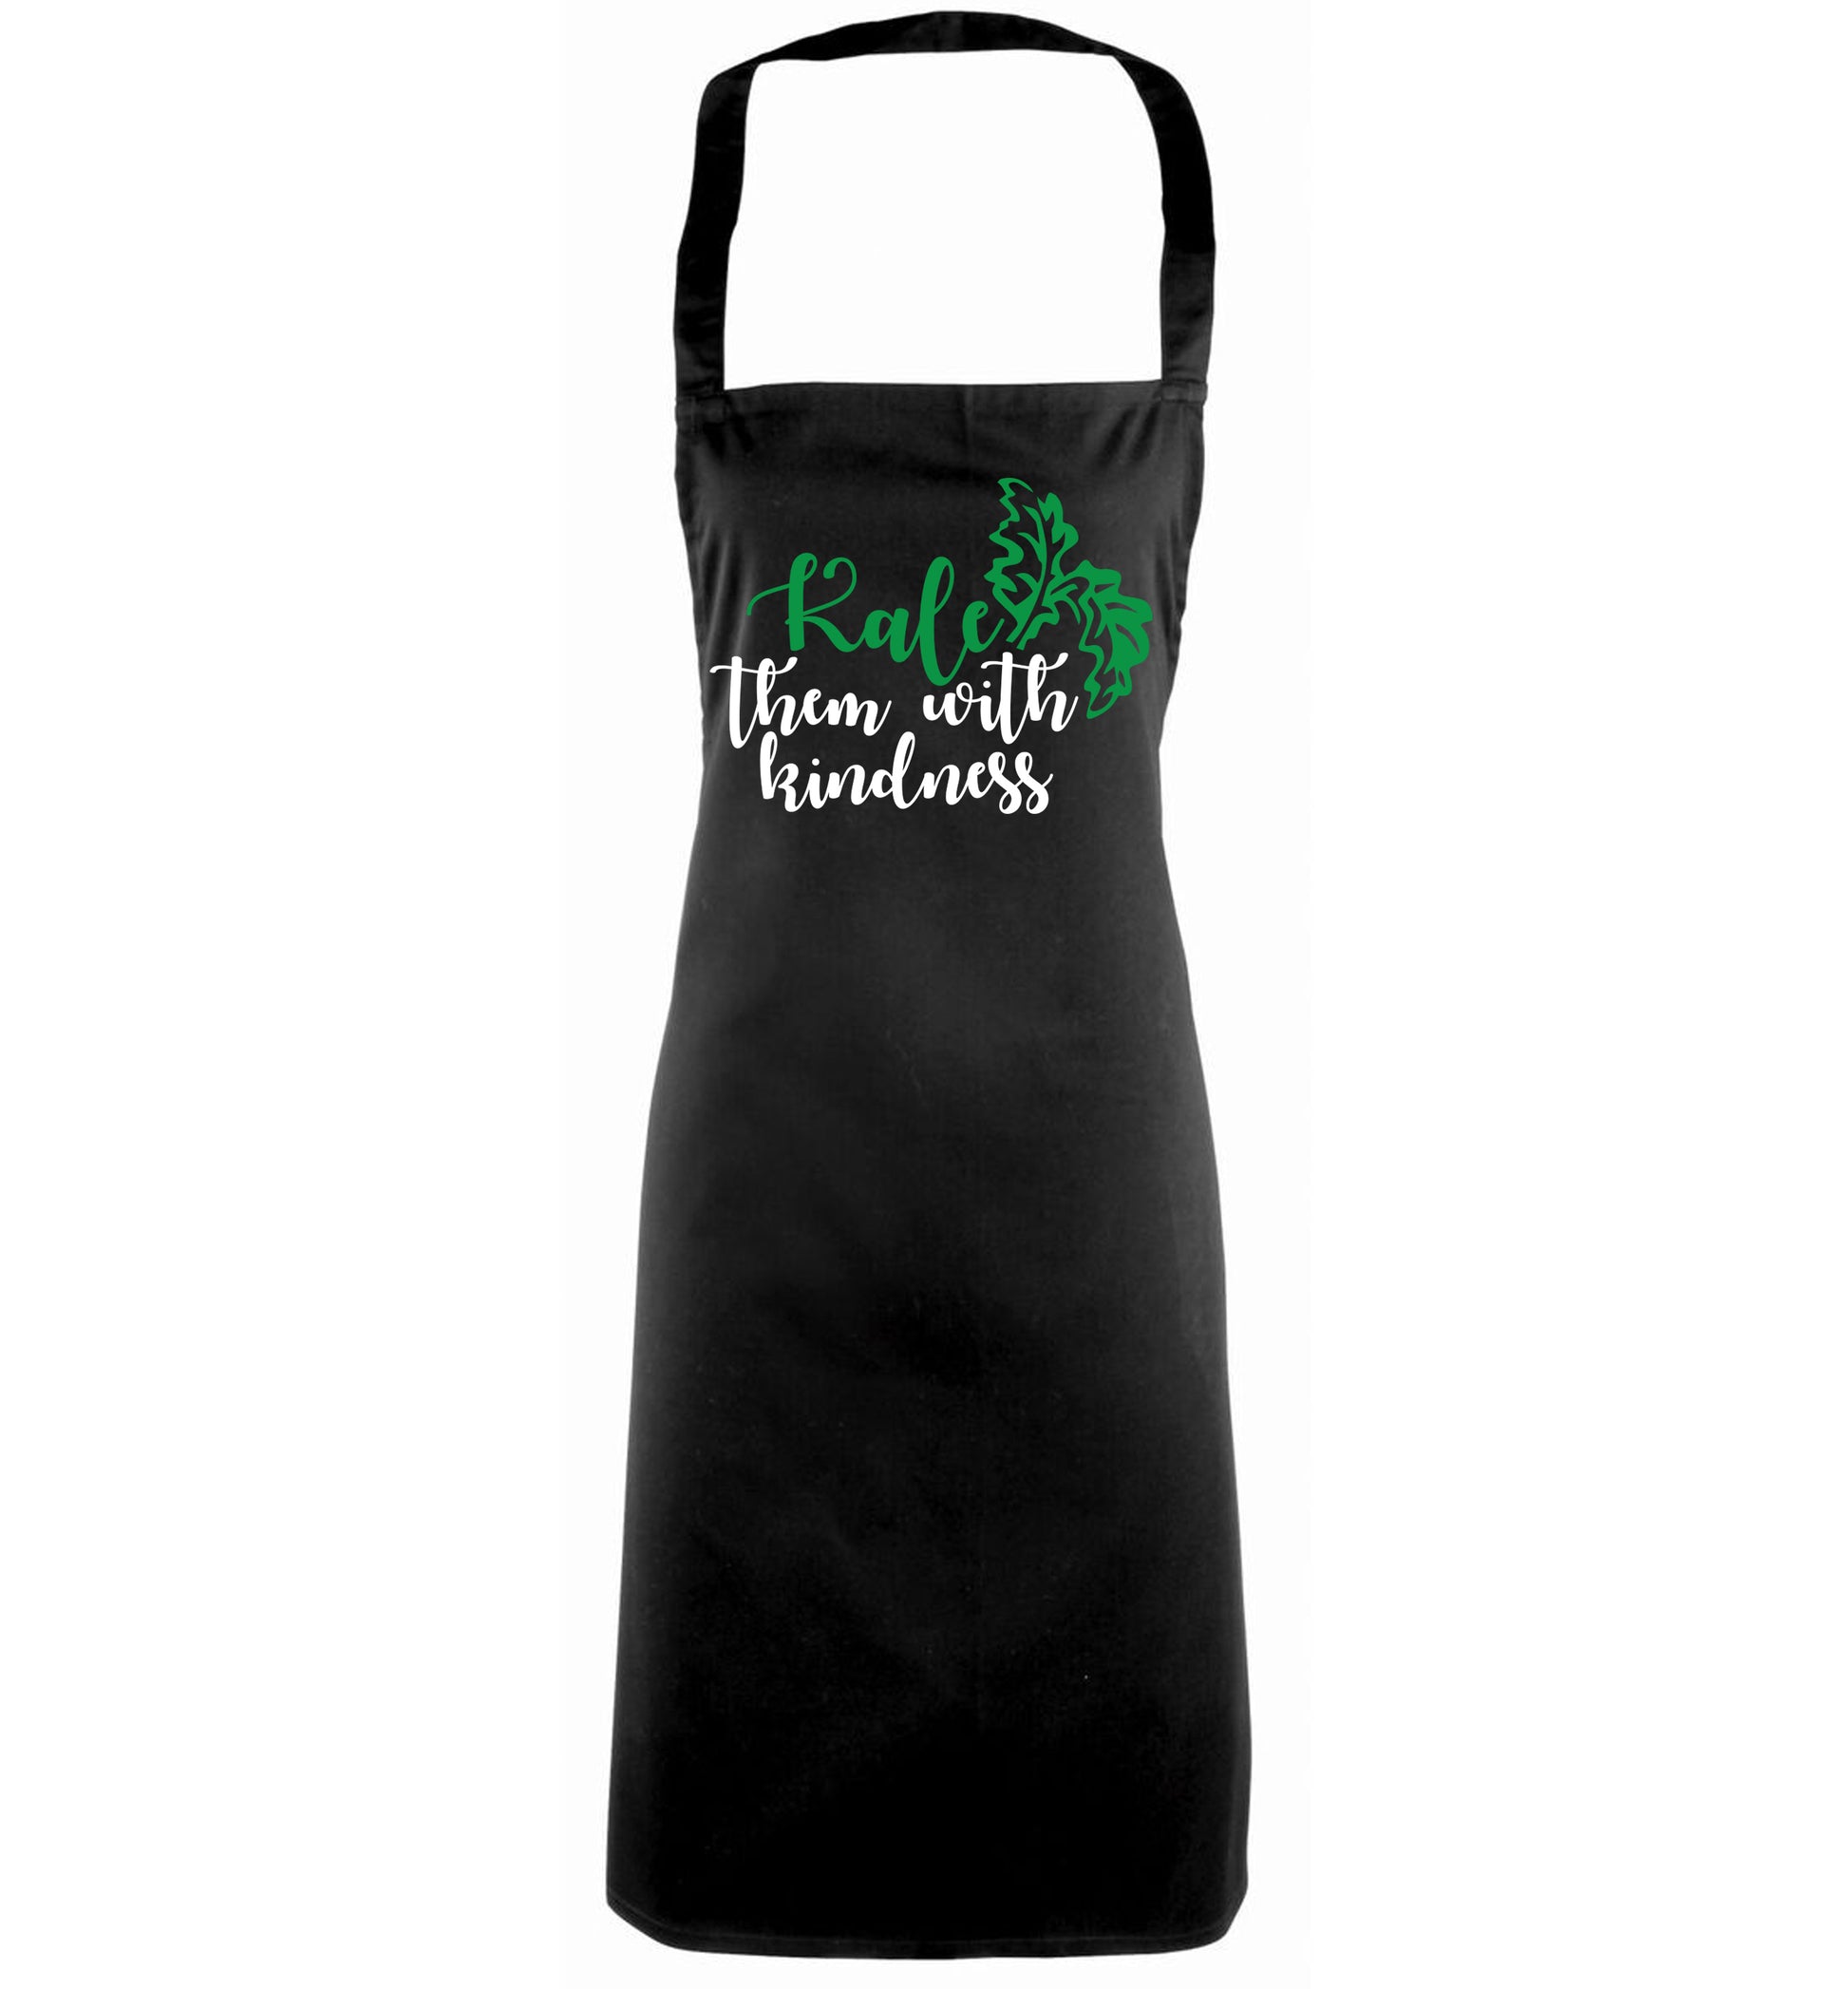 Kale them with kindness black apron